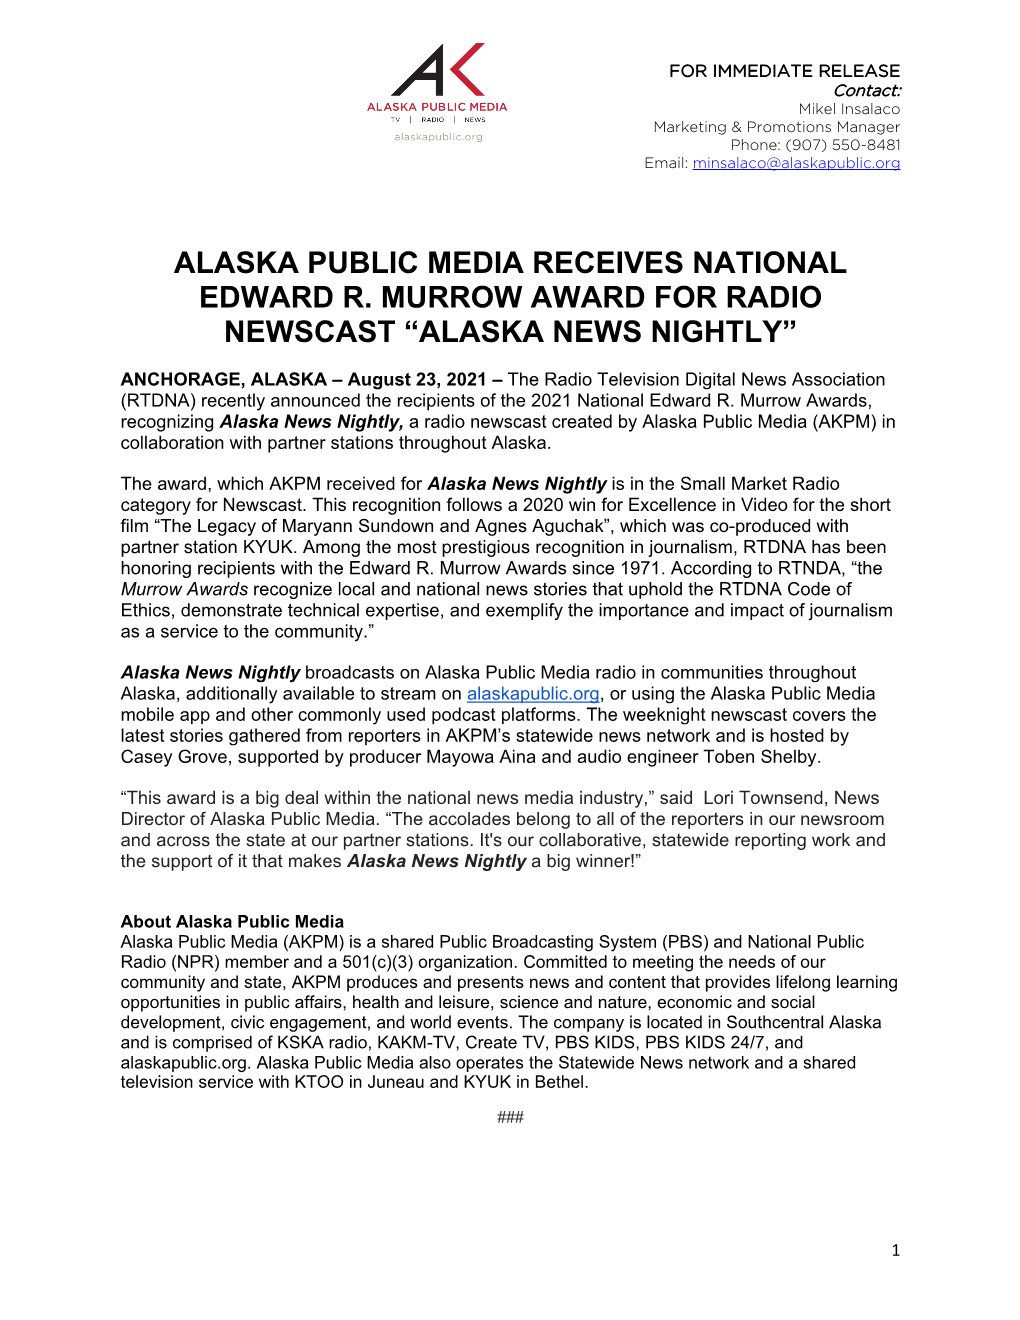 Alaska News Nightly”